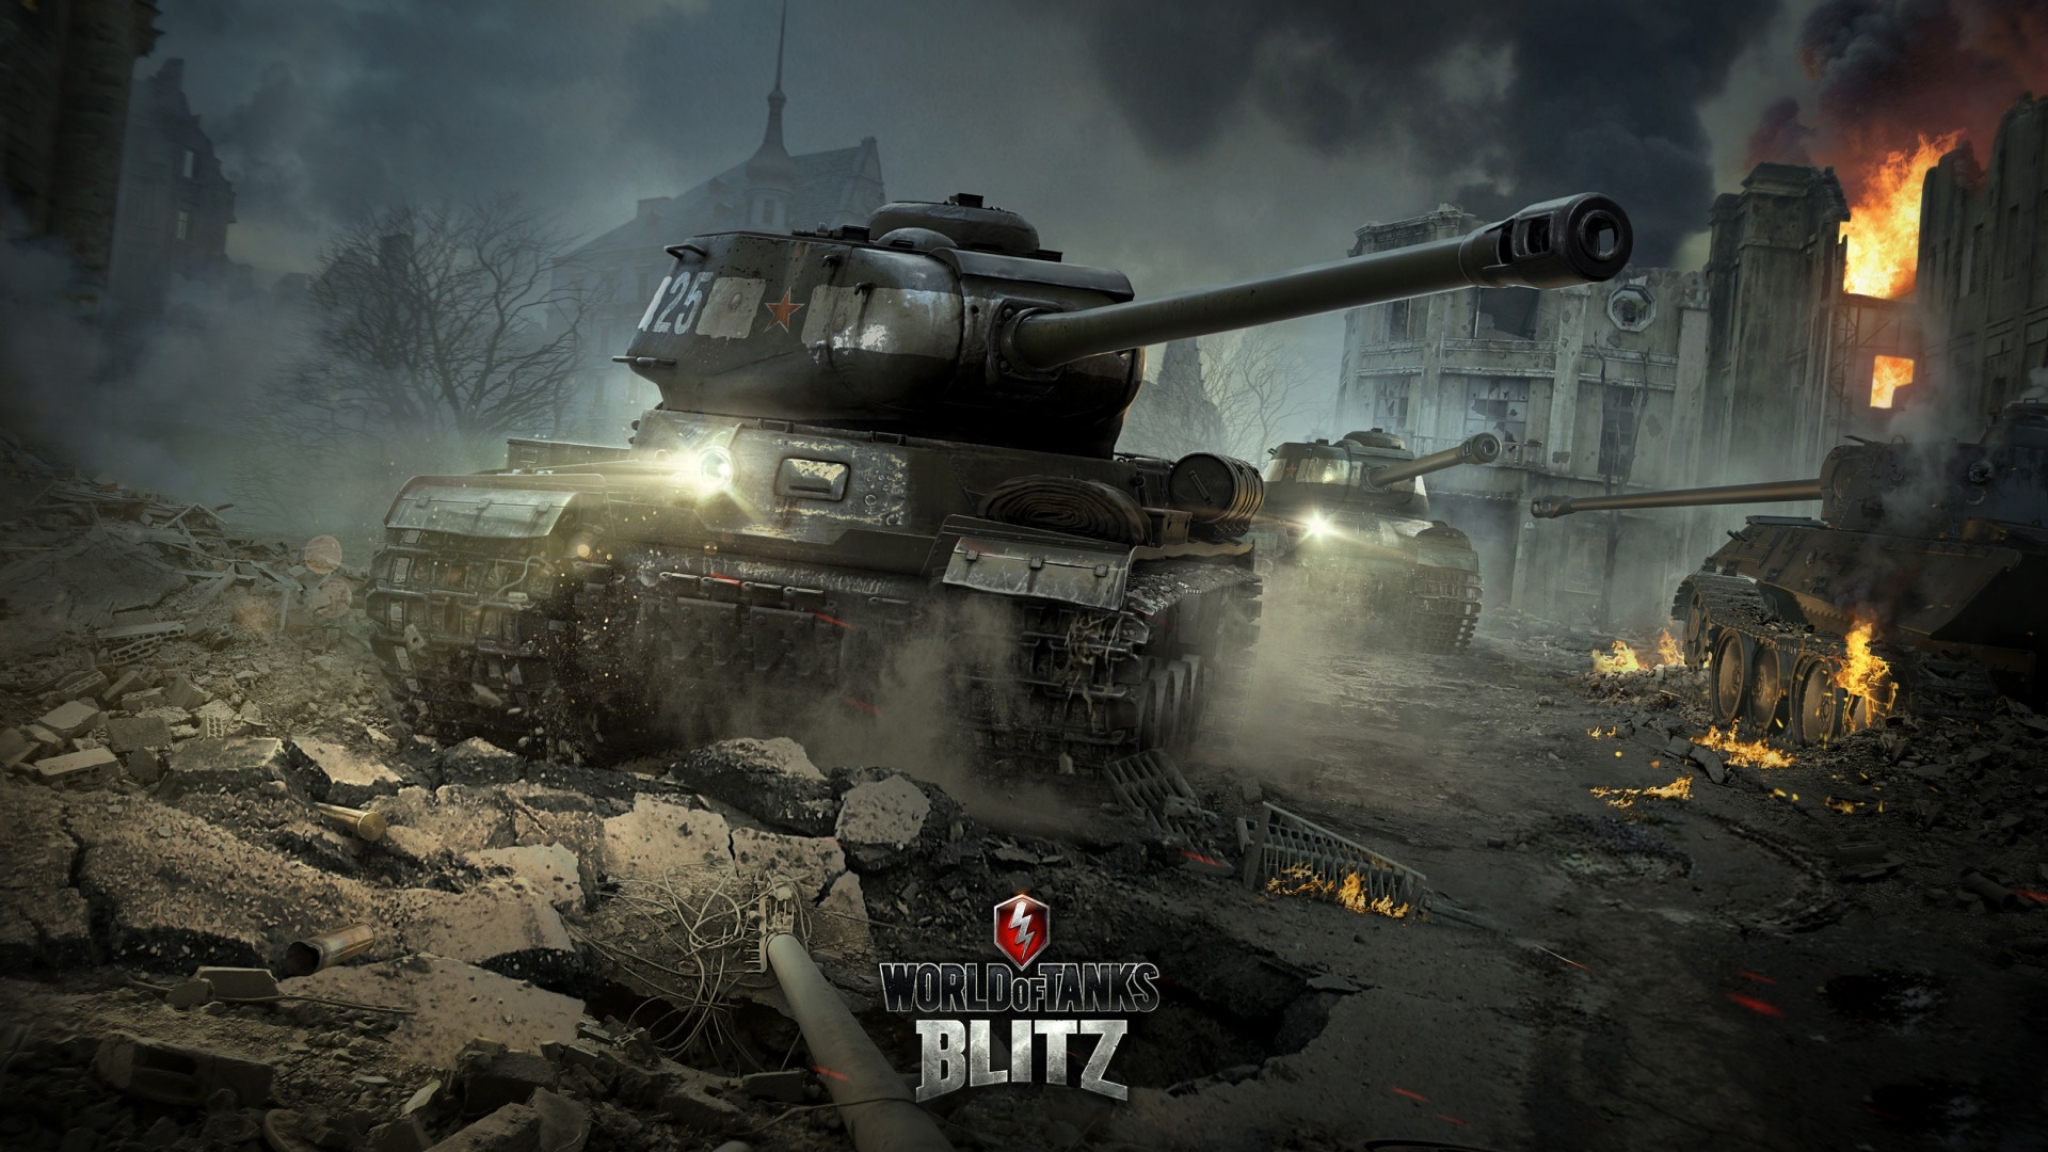 world of tanks blitz download pc free